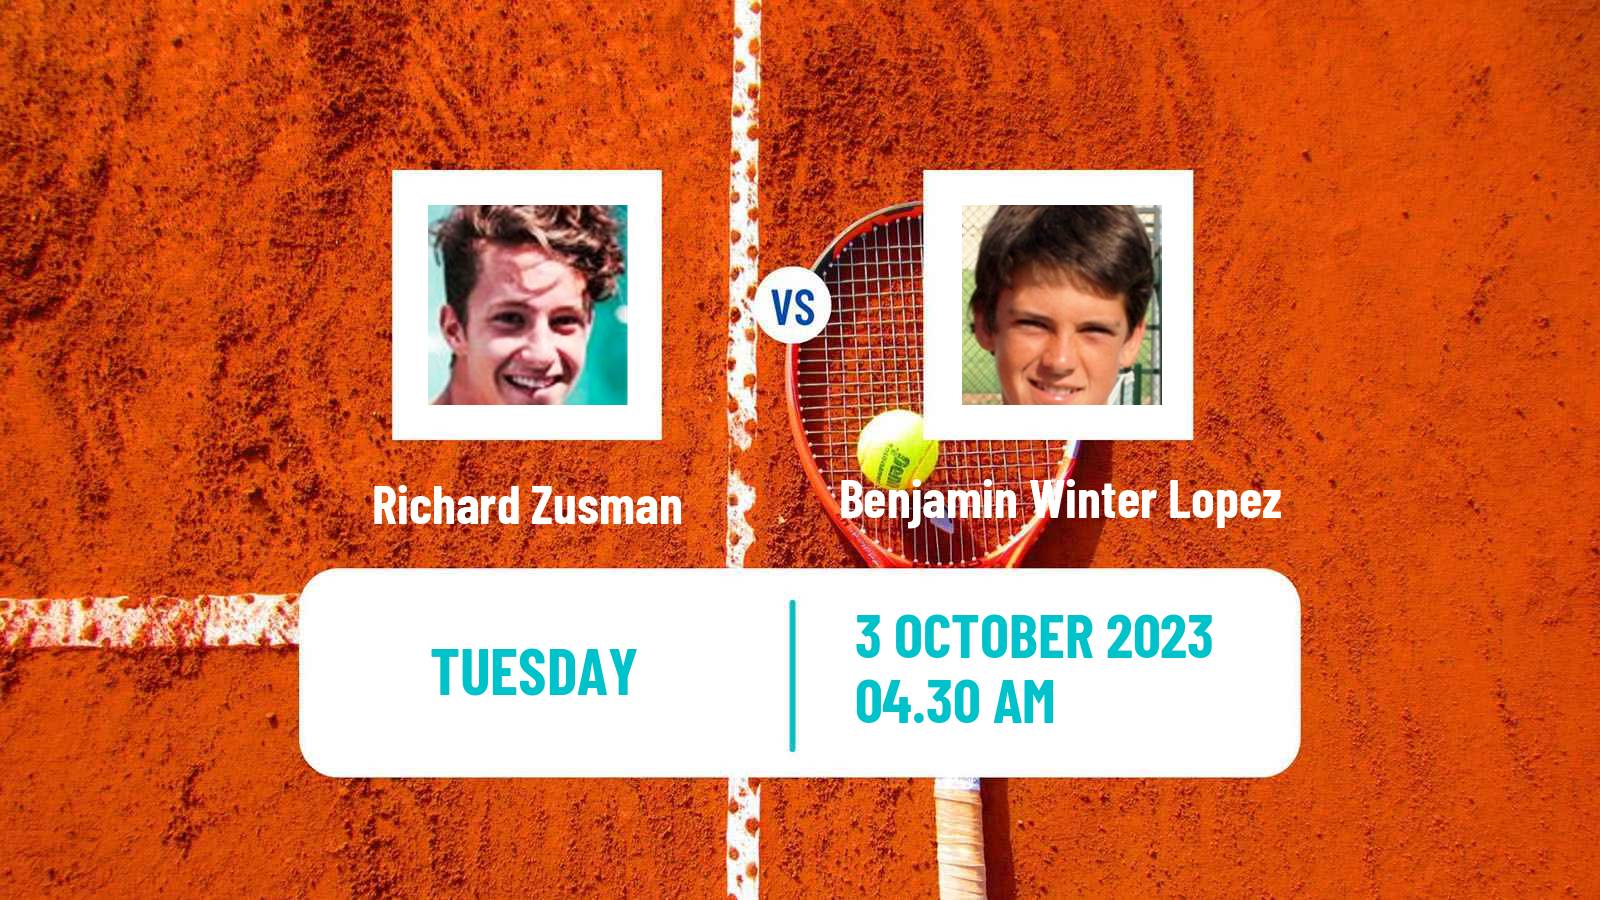 Tennis ITF M25 Zaragoza Men Richard Zusman - Benjamin Winter Lopez